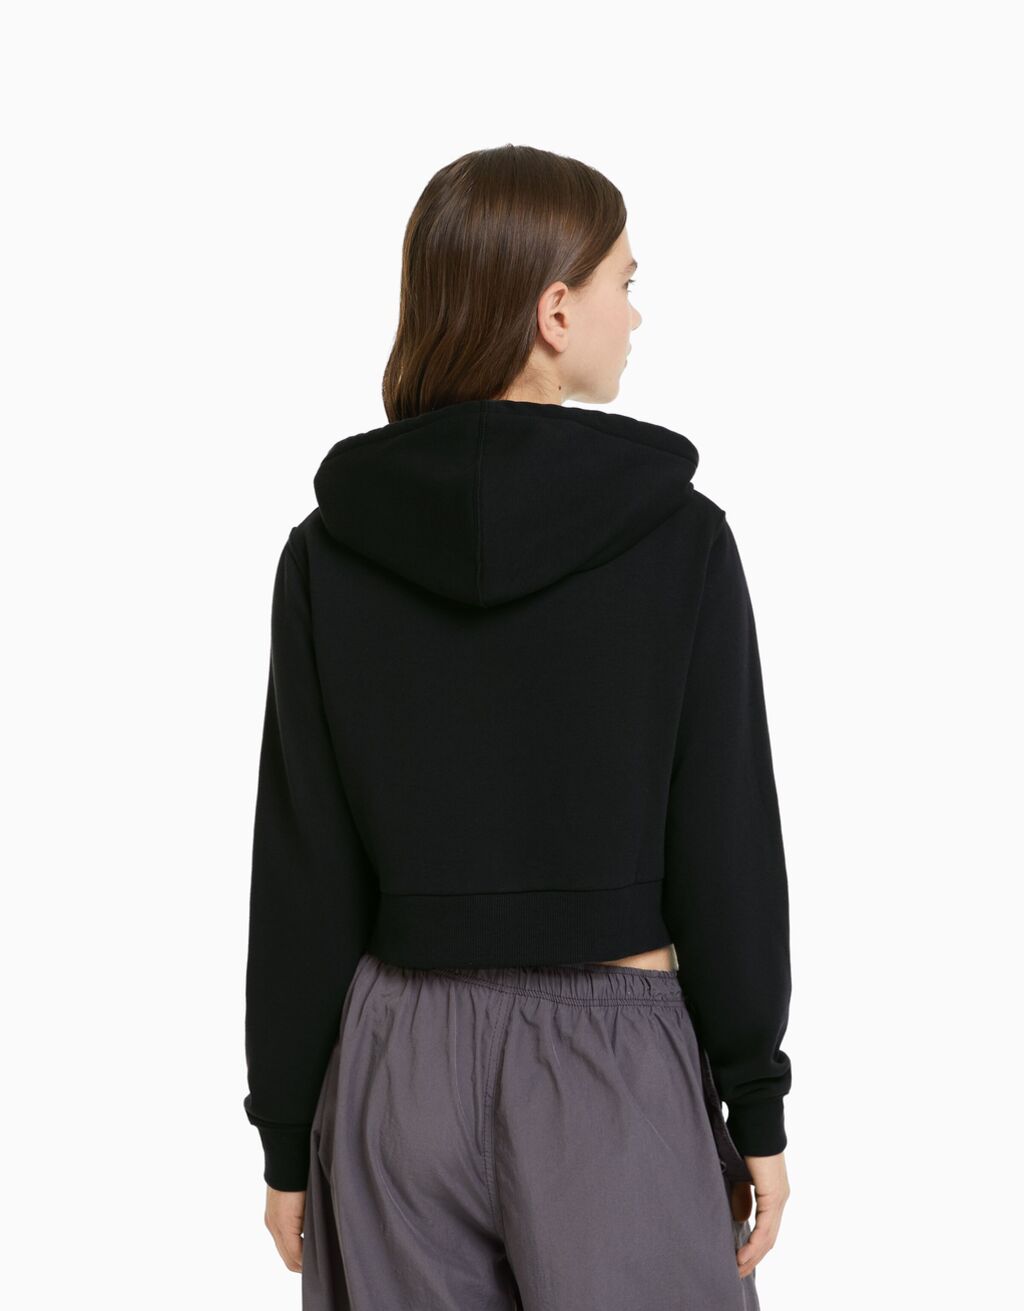 Reimferce Women's Casual Zip up Hoodies Long Tunic Sweatshirts